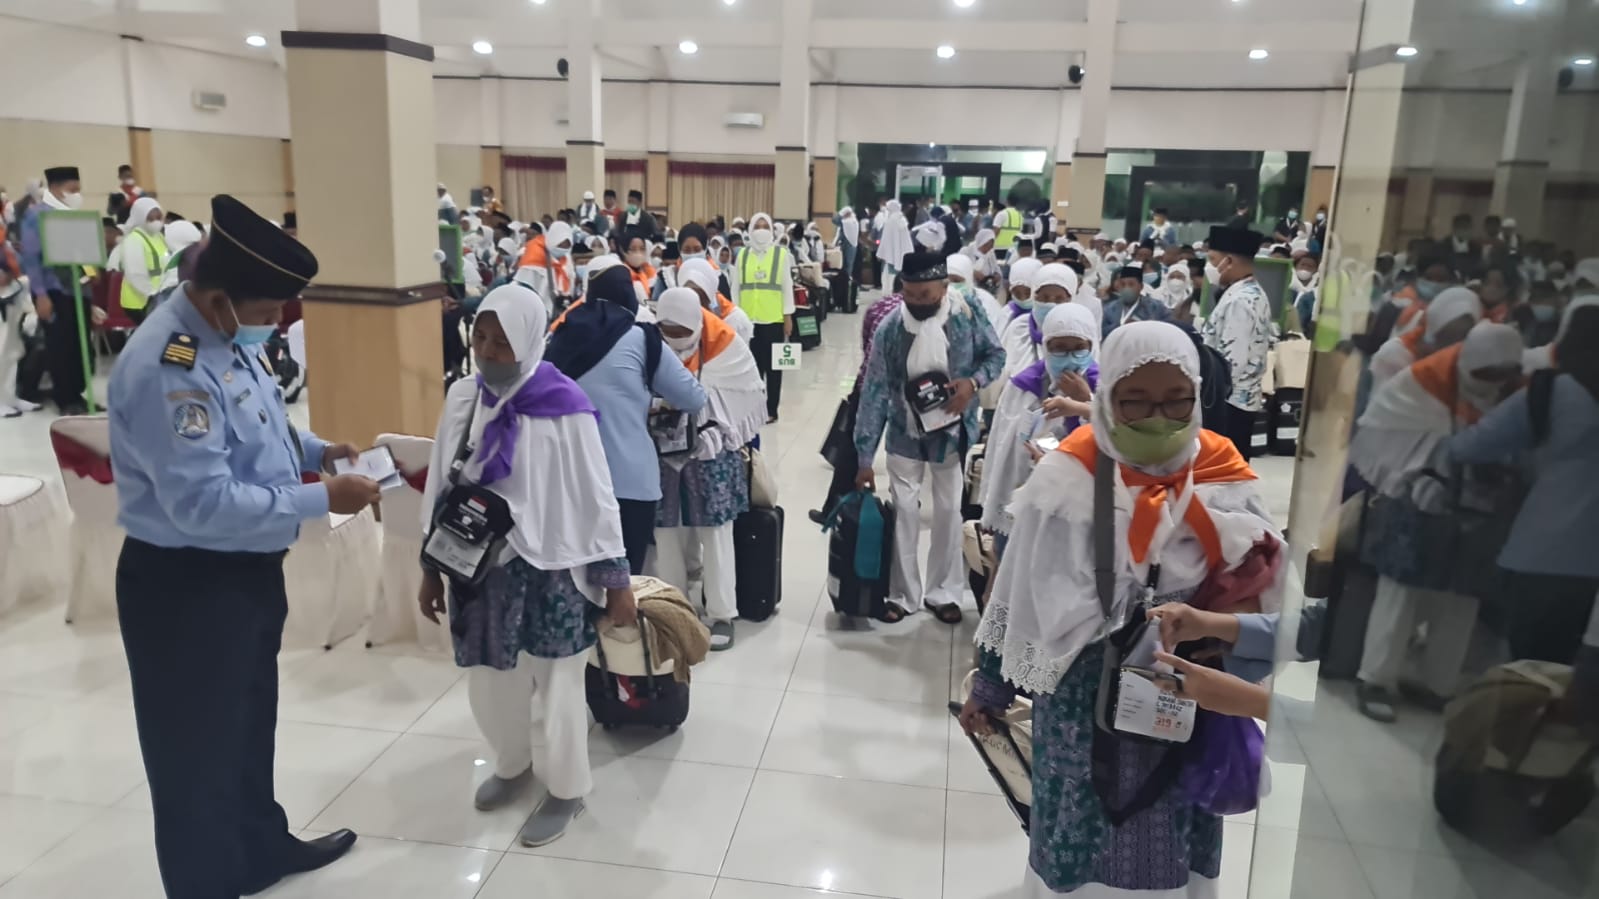 Calhaj Kloter 1 Kabupaten Pati berangkat ke Tanah Suci melalui Bandara Adi Soemarmo Solo, Sabtu (4/6) malam. (Ismail/Jawa Tengah)